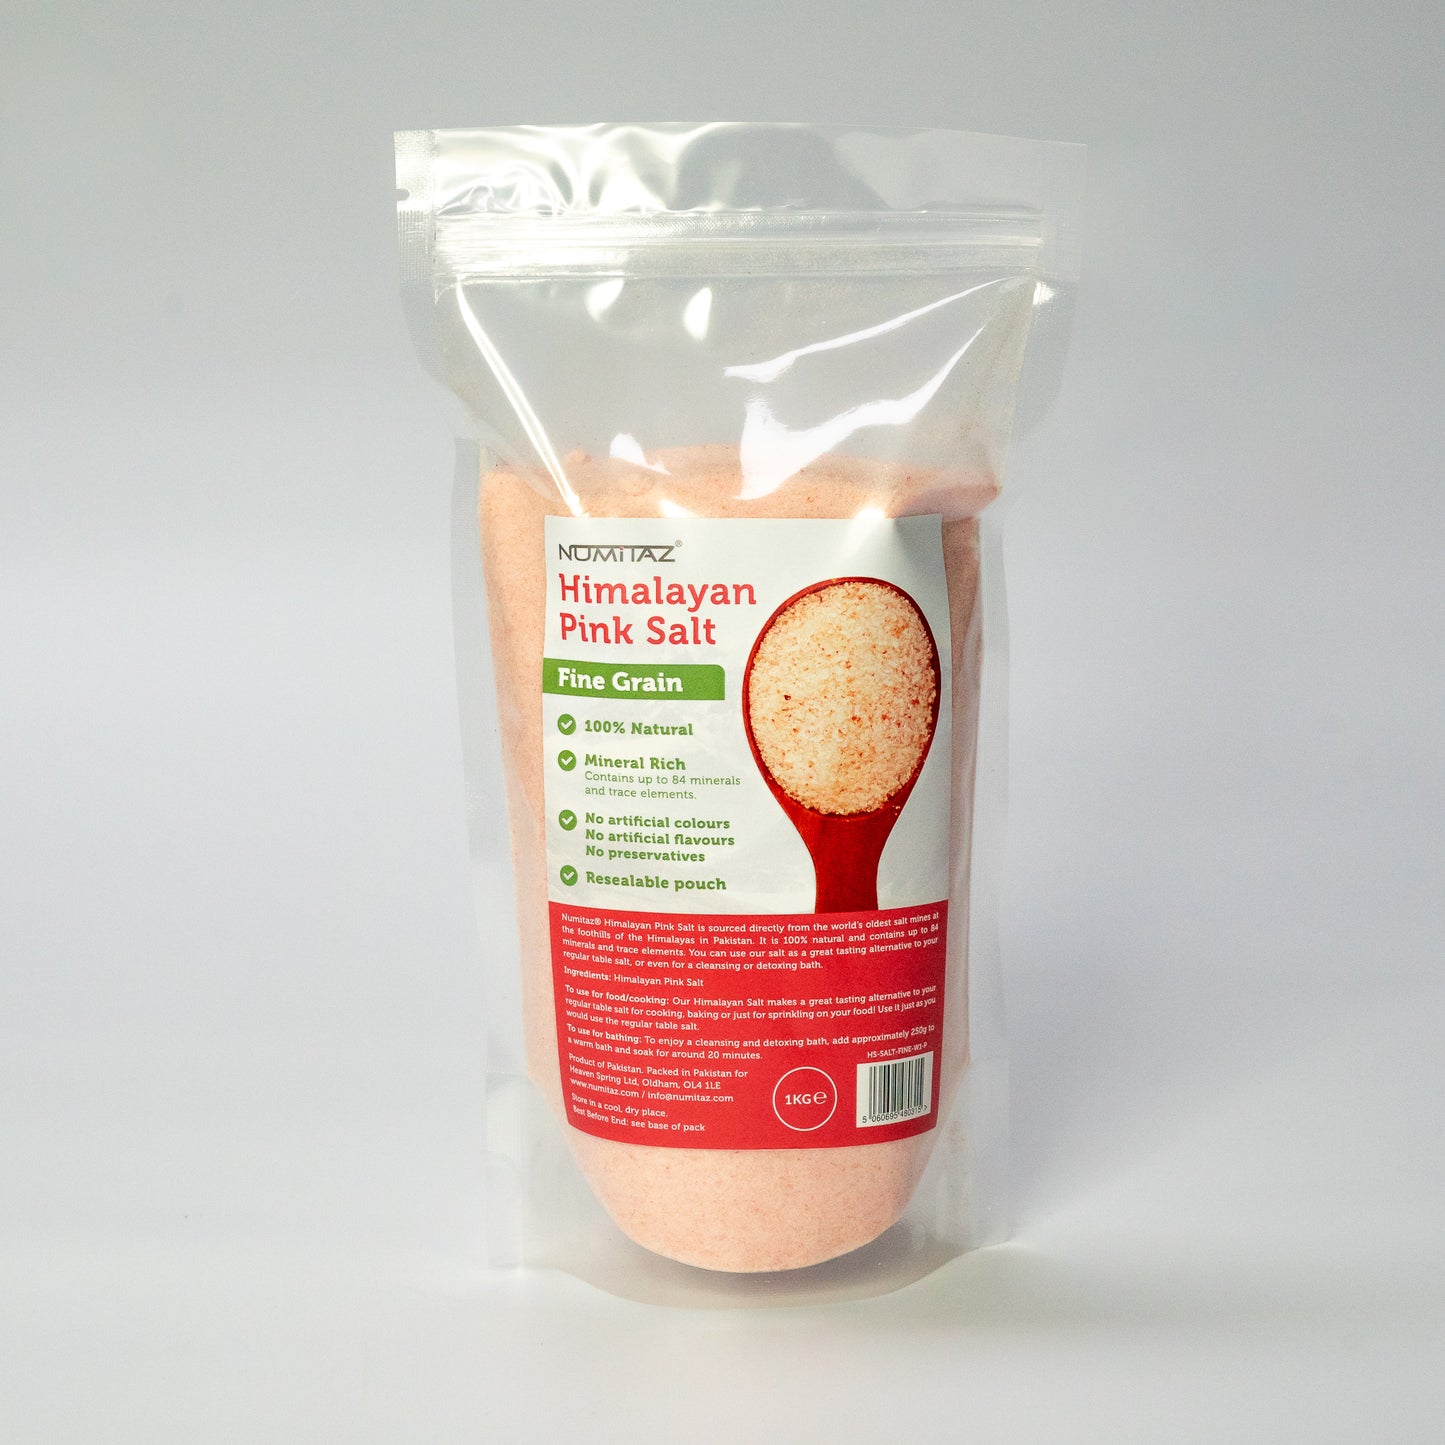 Numitaz Himalayan pink salt fine 1kg - Case of 5